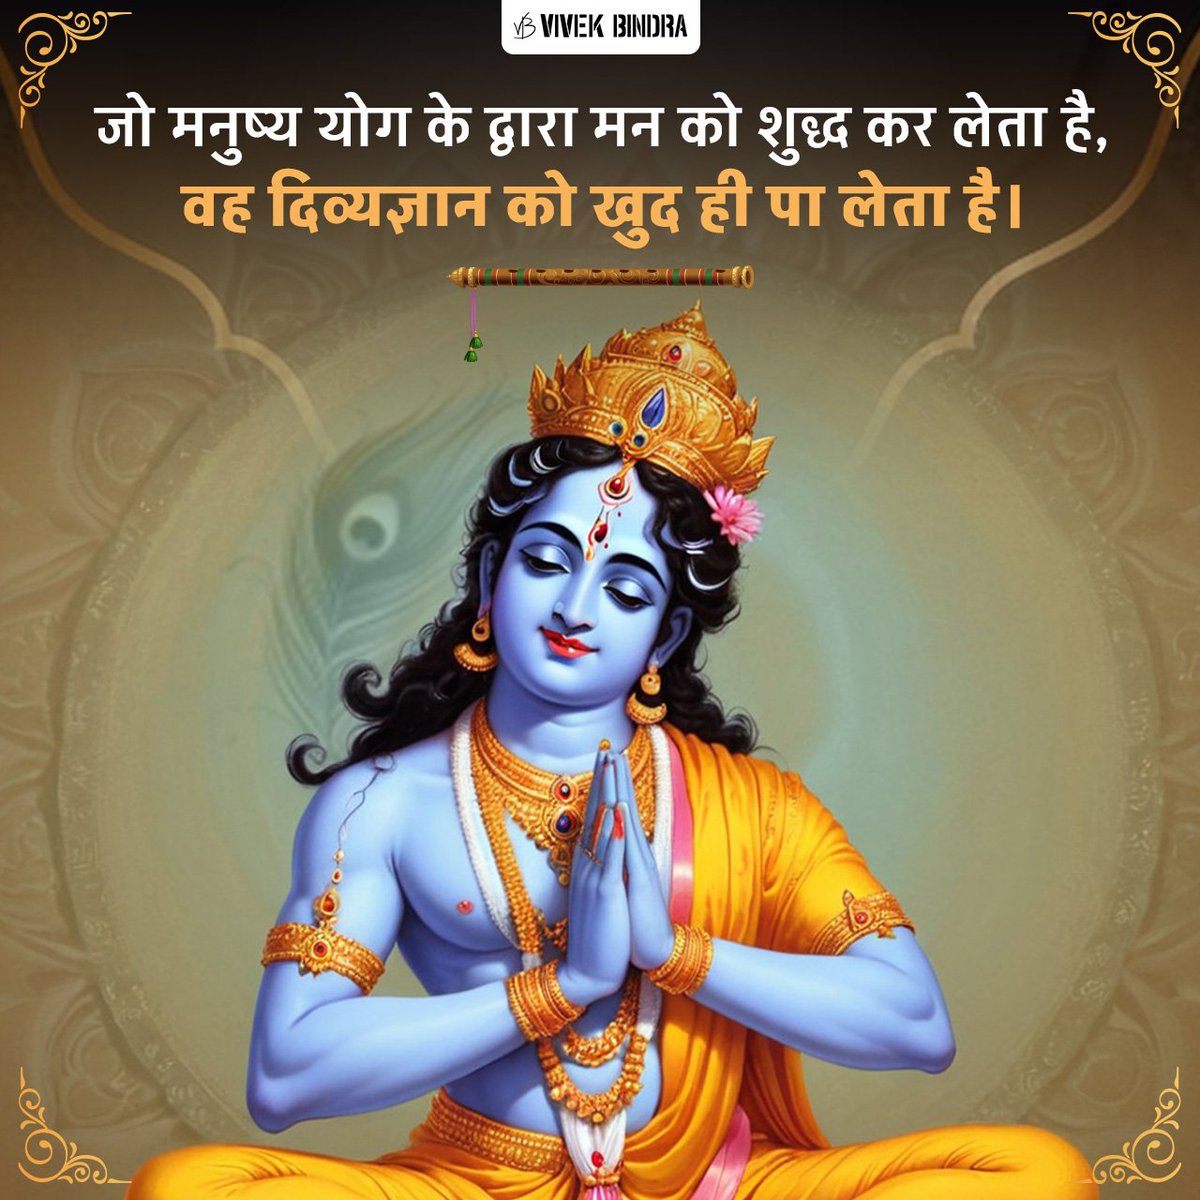 योग द्वारा मन को शुद्ध करने वाले को दिव्य ज्ञान की प्राप्ति हो जाती है।

#BhagavadGita #HareKrishna #HariBol #DrVivekBindra #BadaBusiness